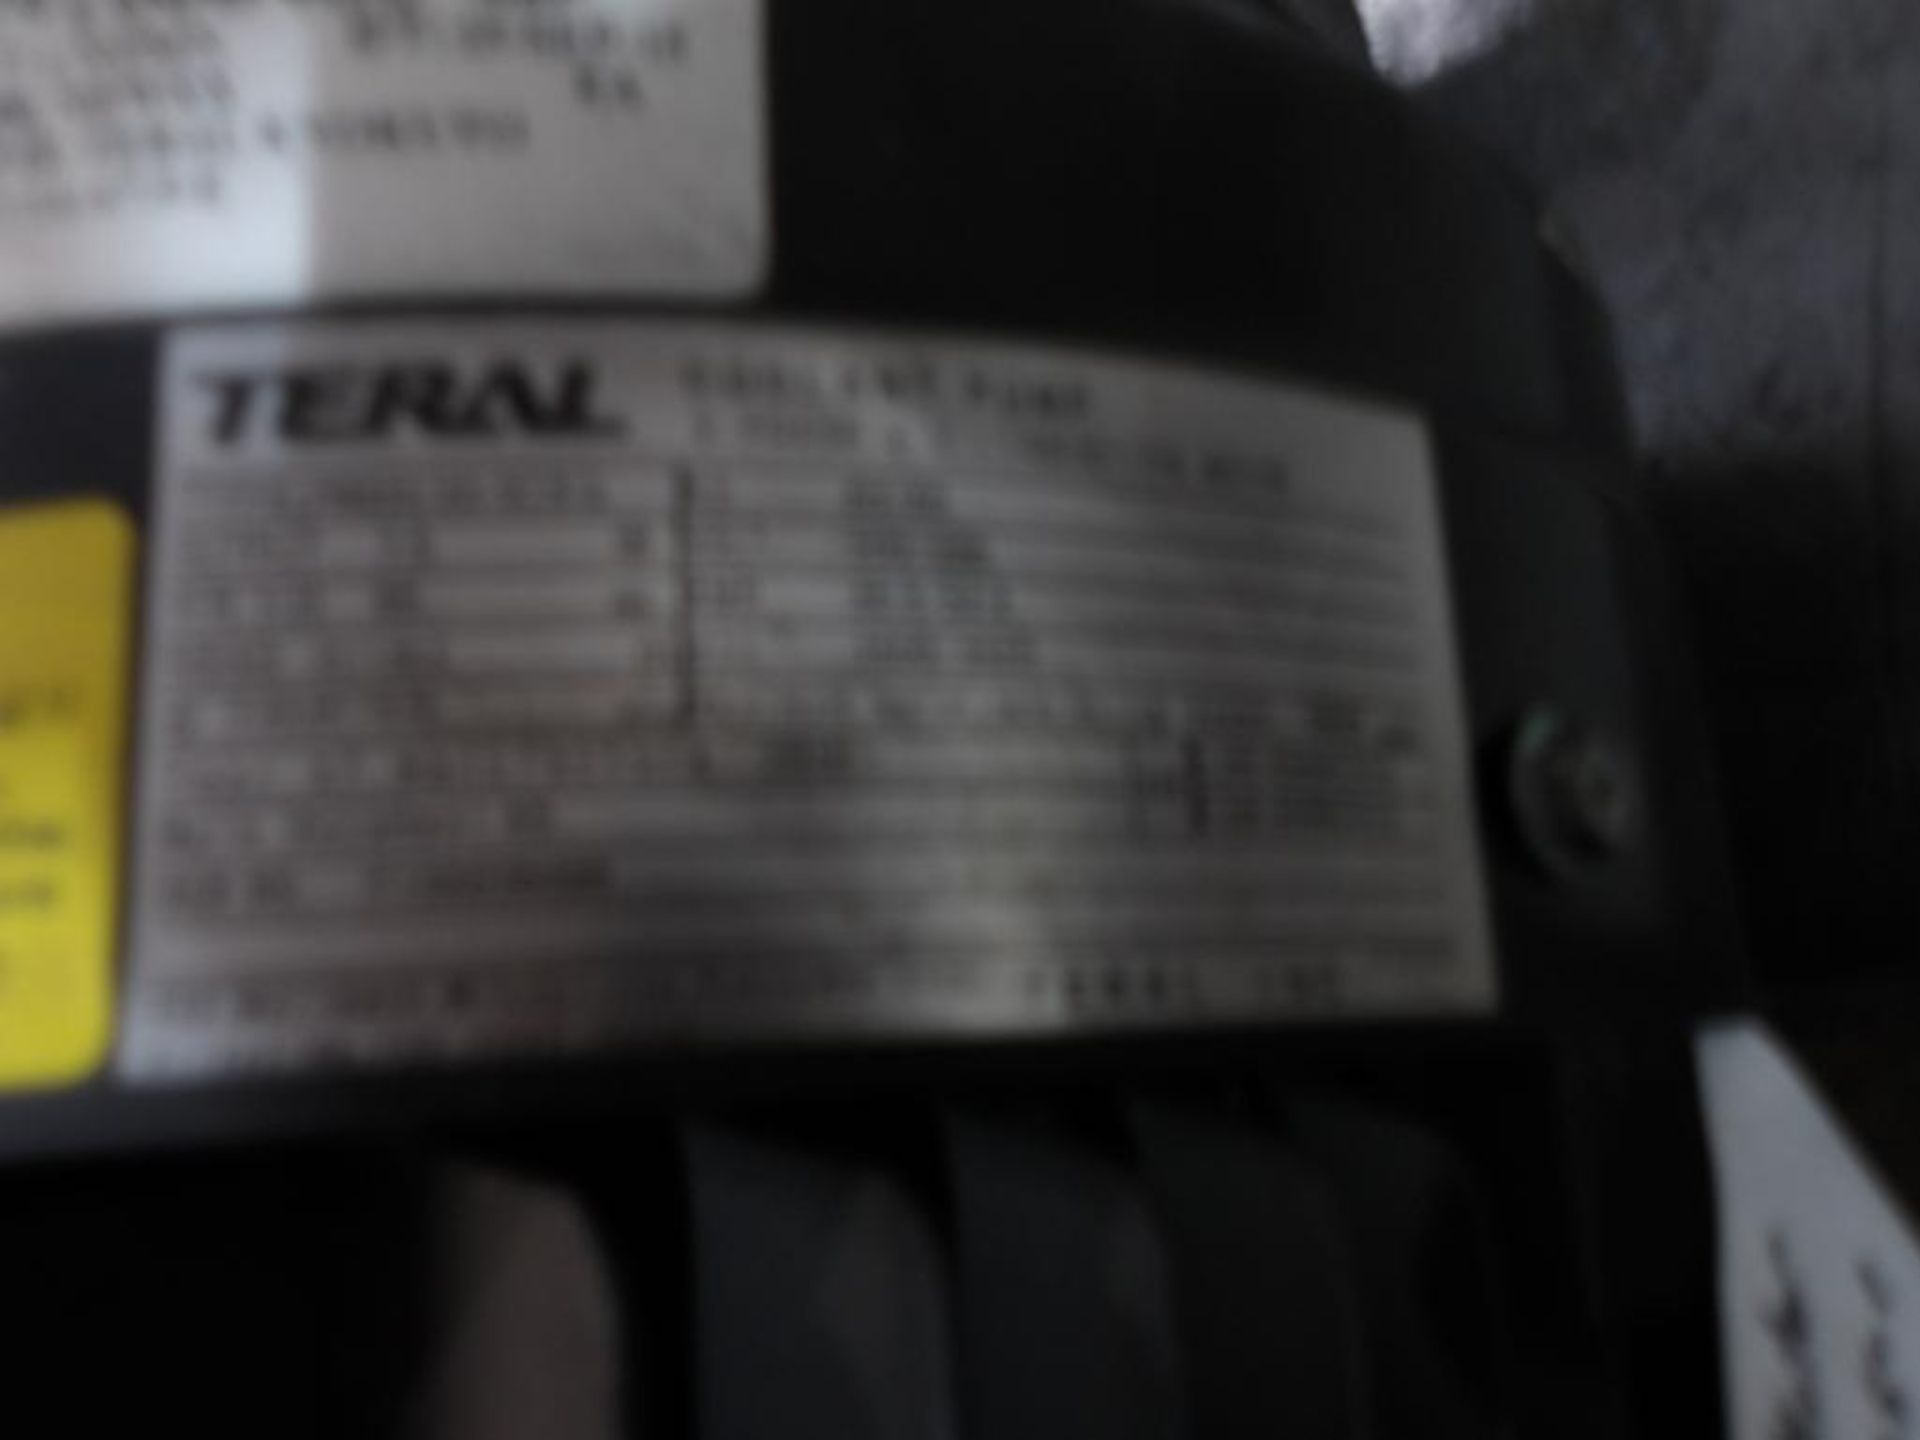 Teral Coolant Pumps & Motors, Type LPW653/2A-67.5-E, 200/220 V (New) - Image 4 of 4